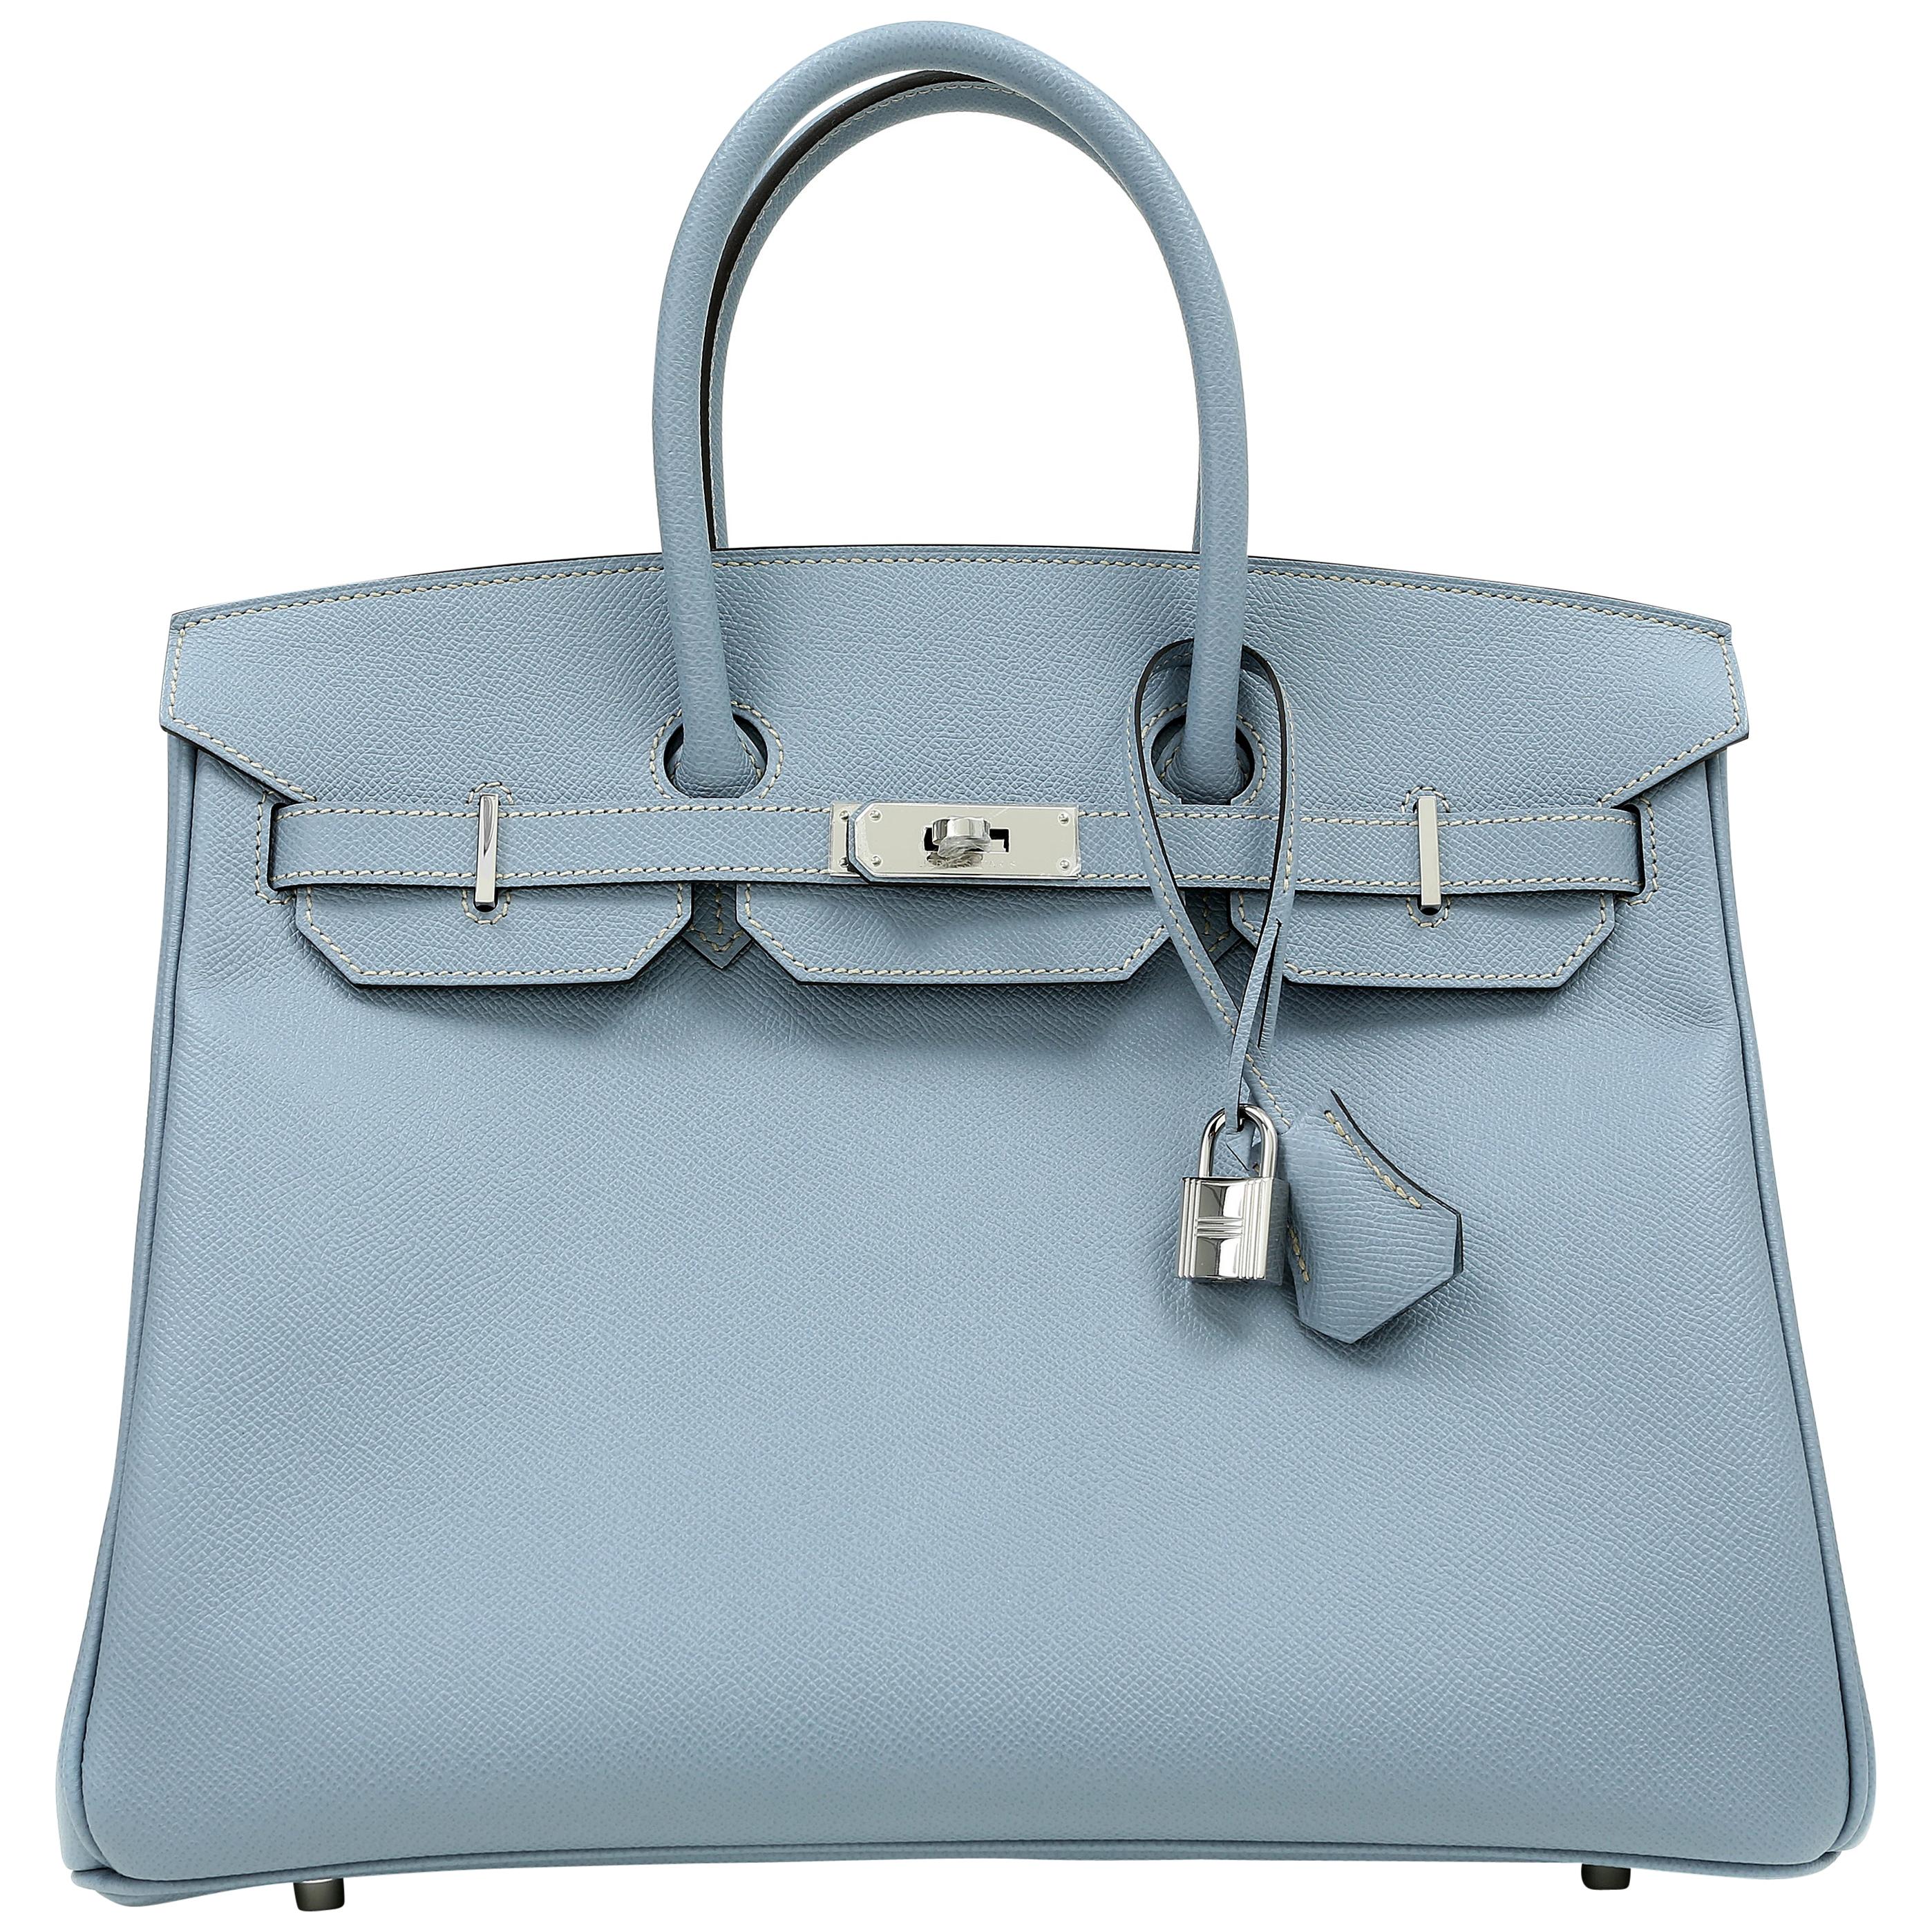 Hermes Birkin Bag 35cm Blue Lin Bleu Lin So Pretty New Color